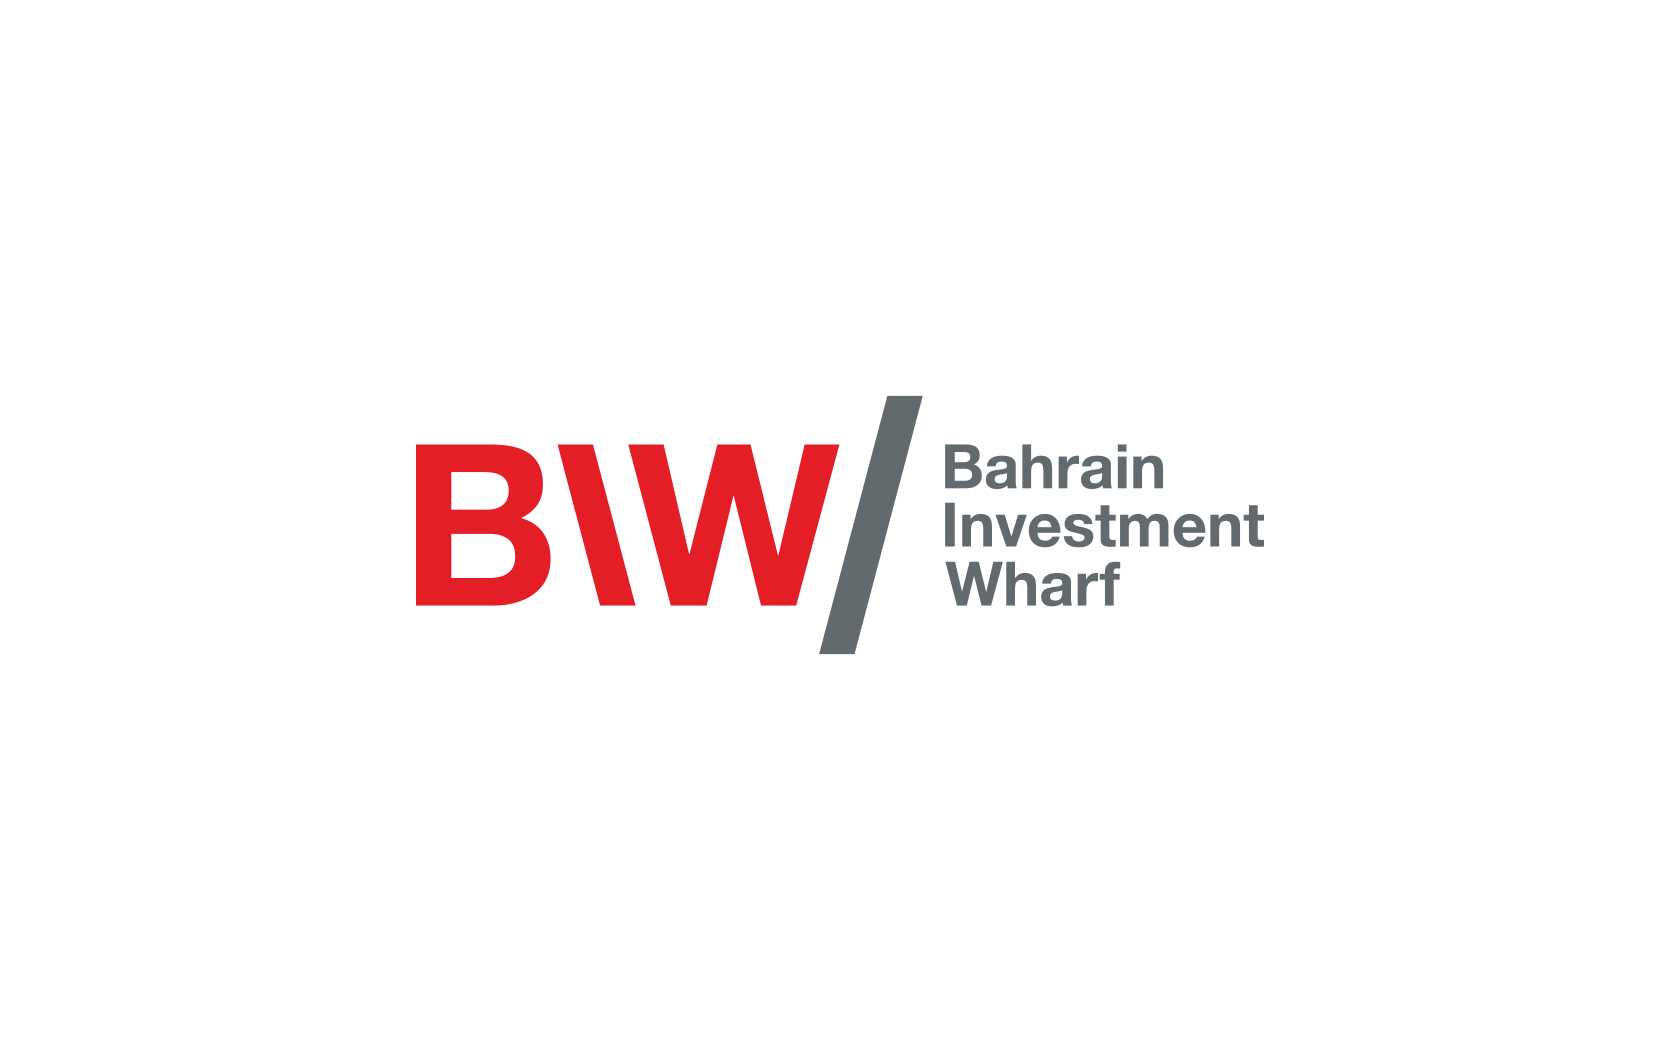 BIW. Brand logo in vertical lockup